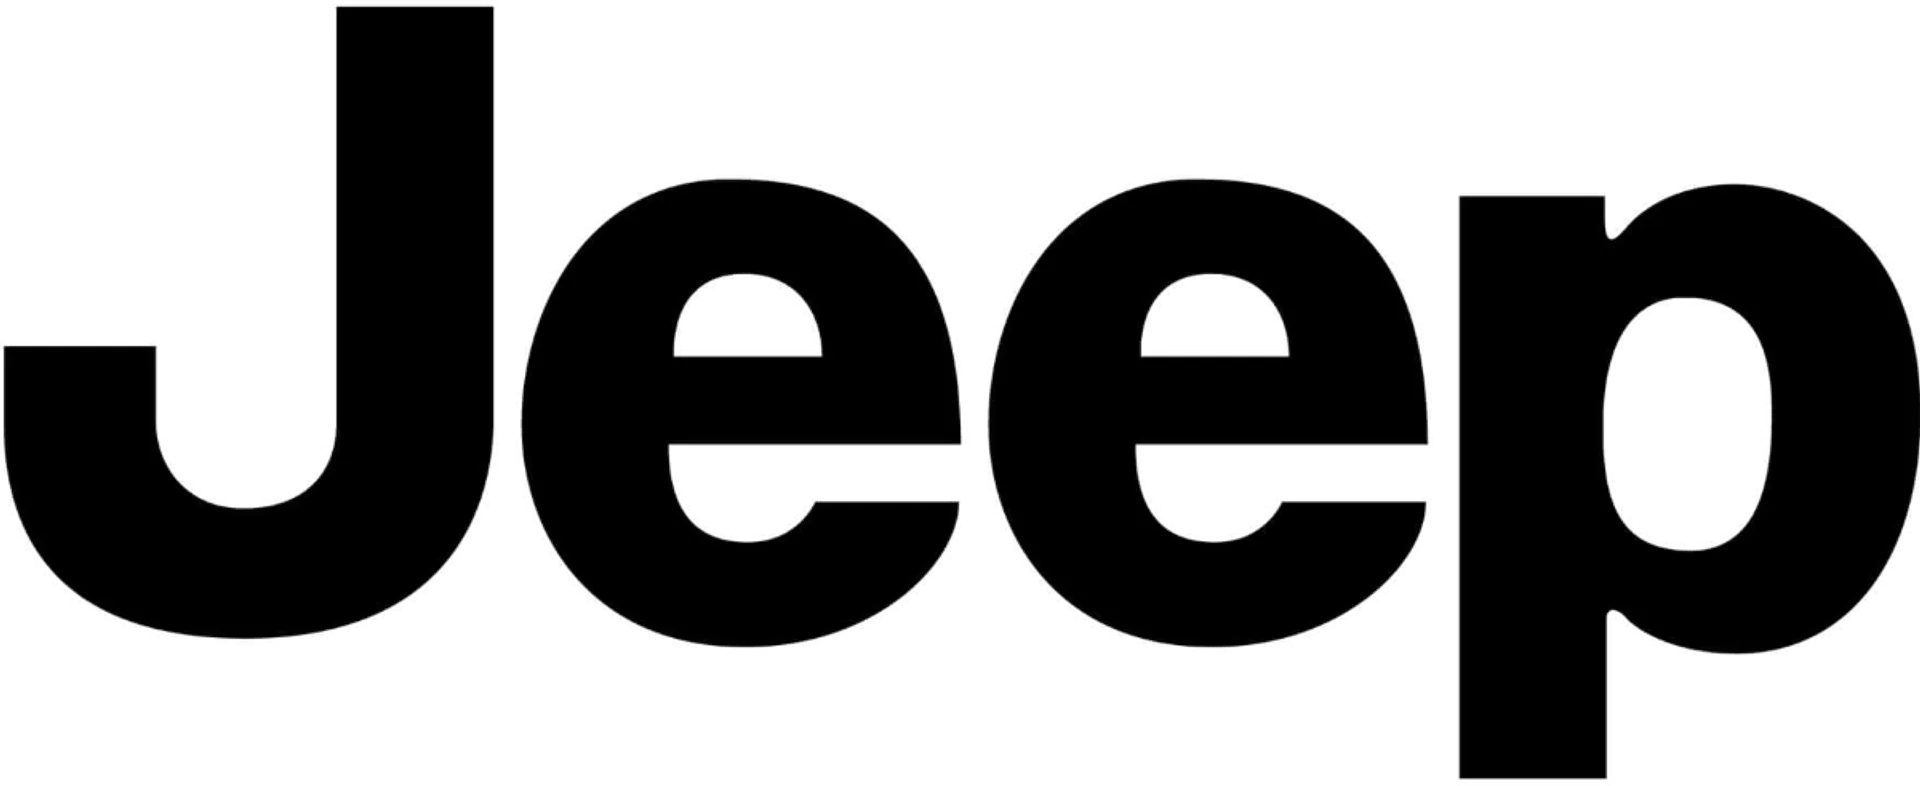 JEEP logo